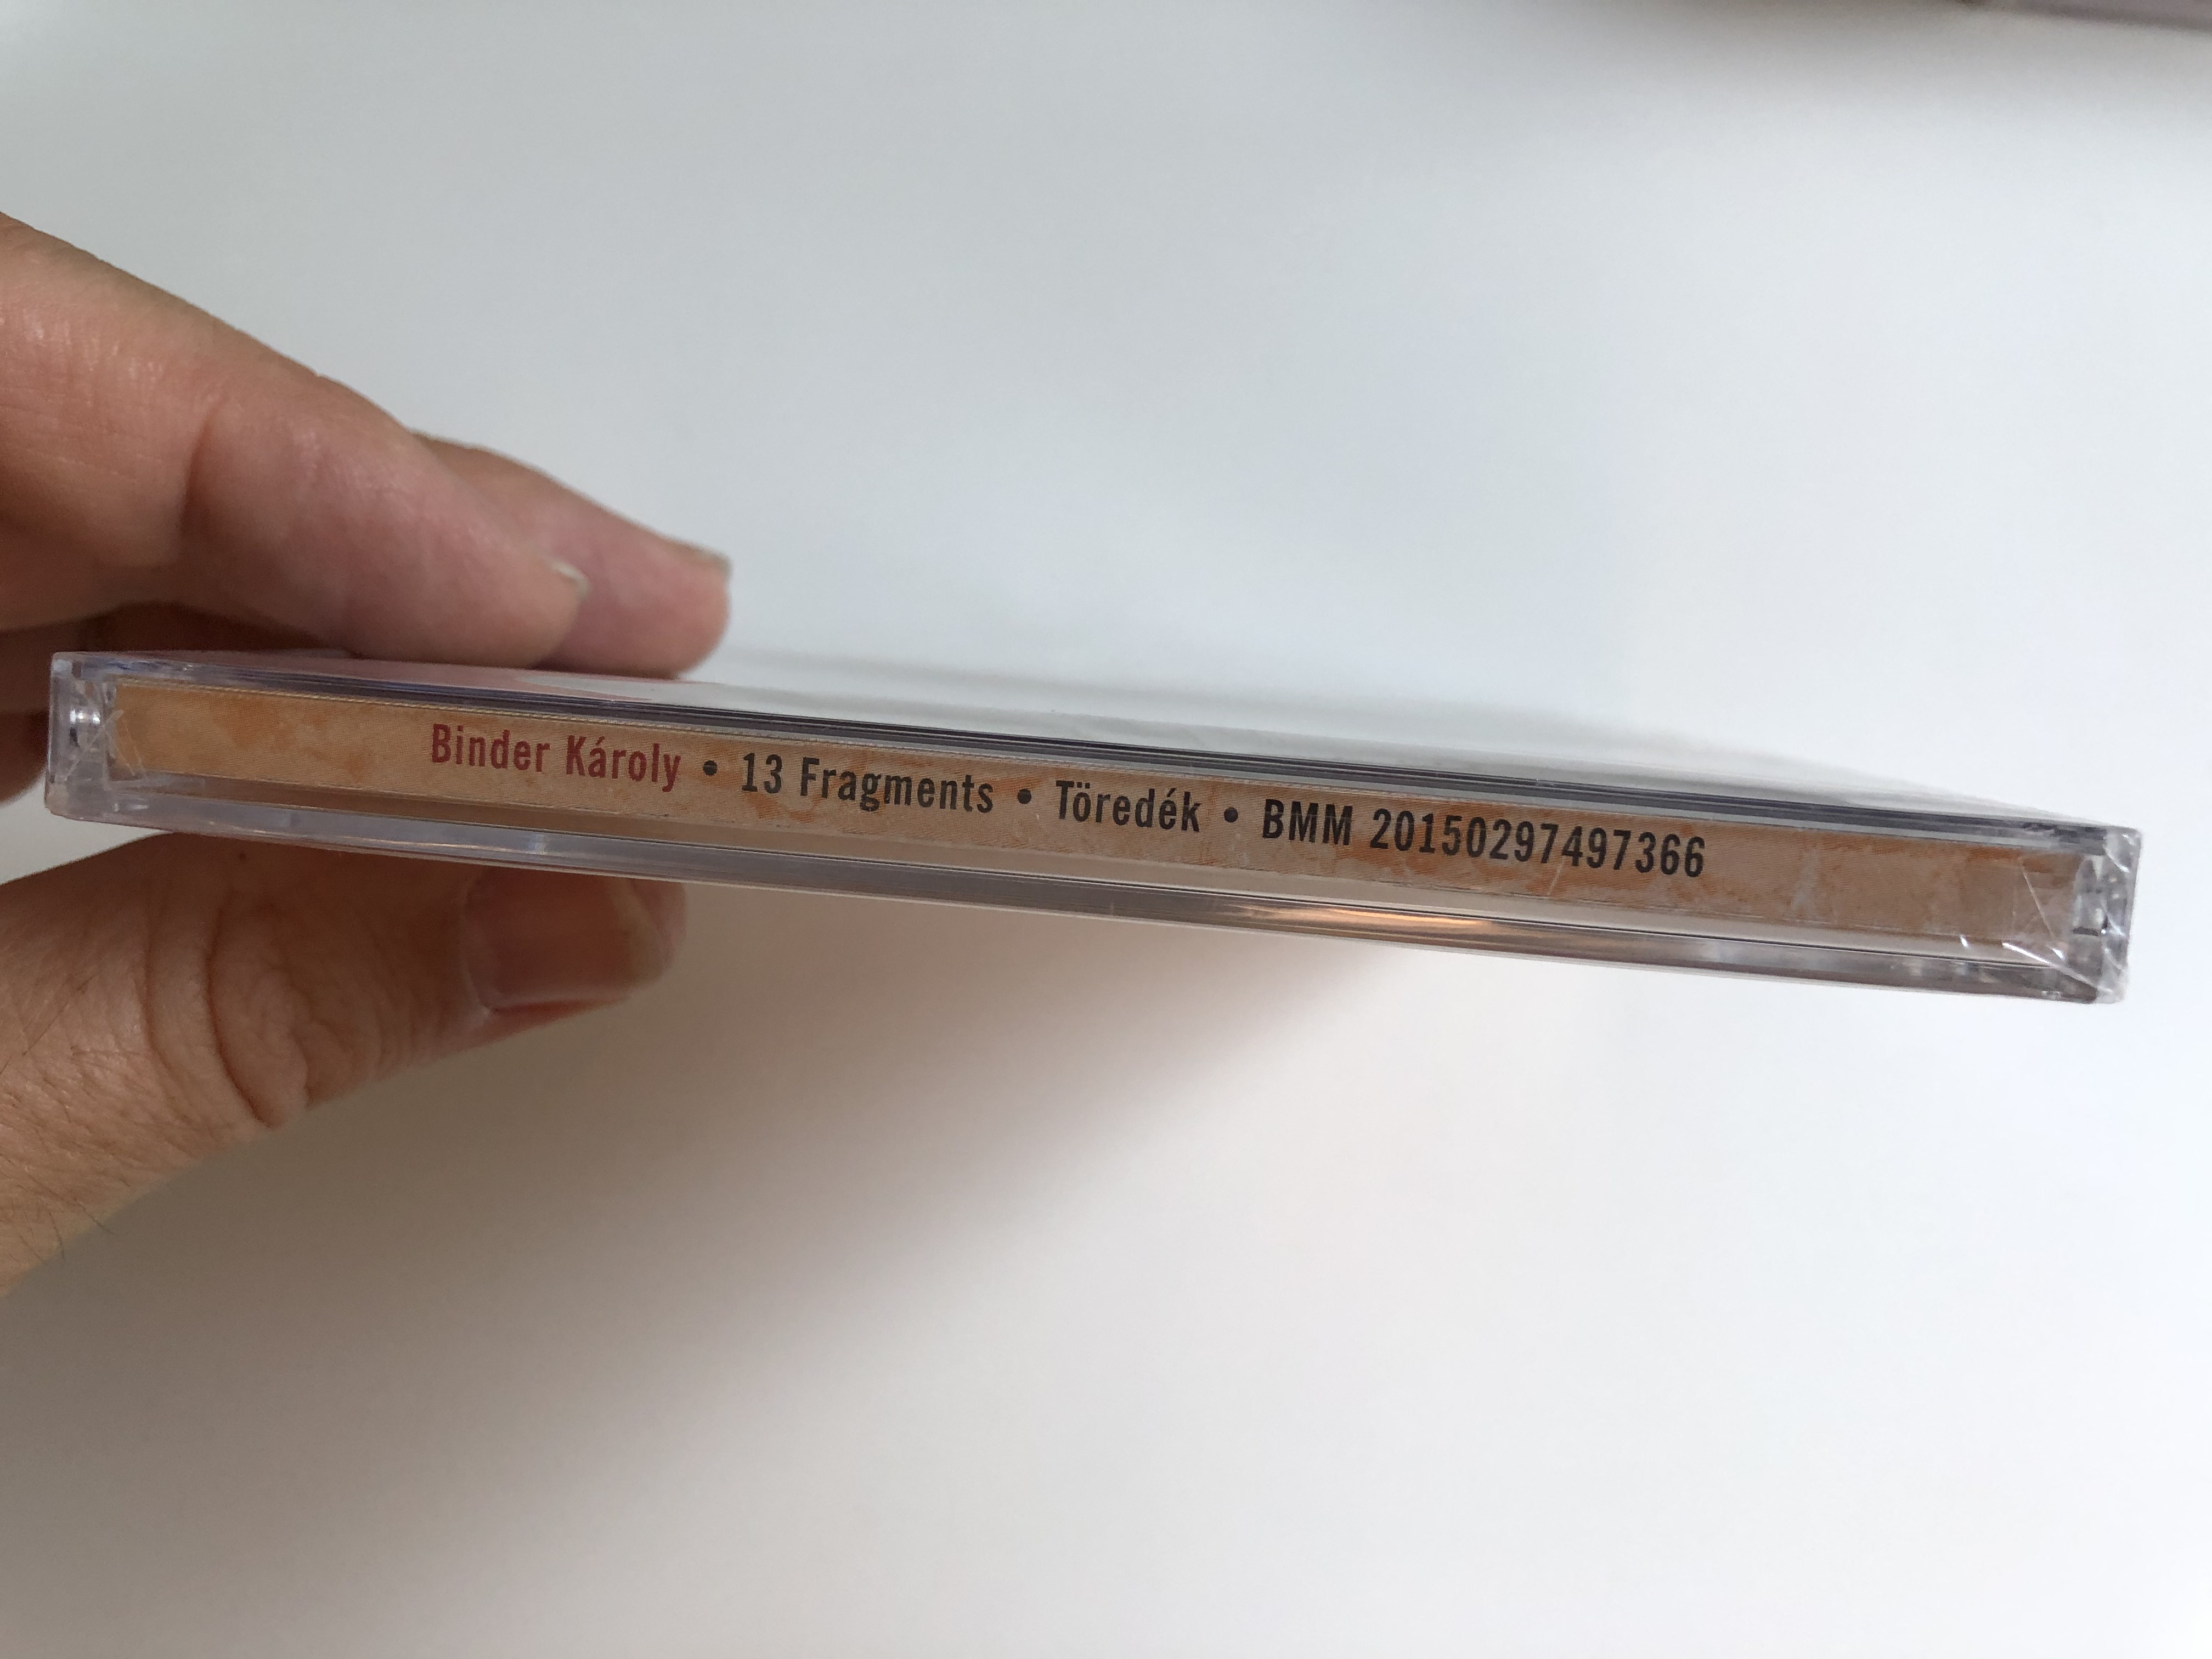 binder-karoly-13-fragments-toredek-bmm-audio-cd-2014-bmm-20150297497366-3-.jpg